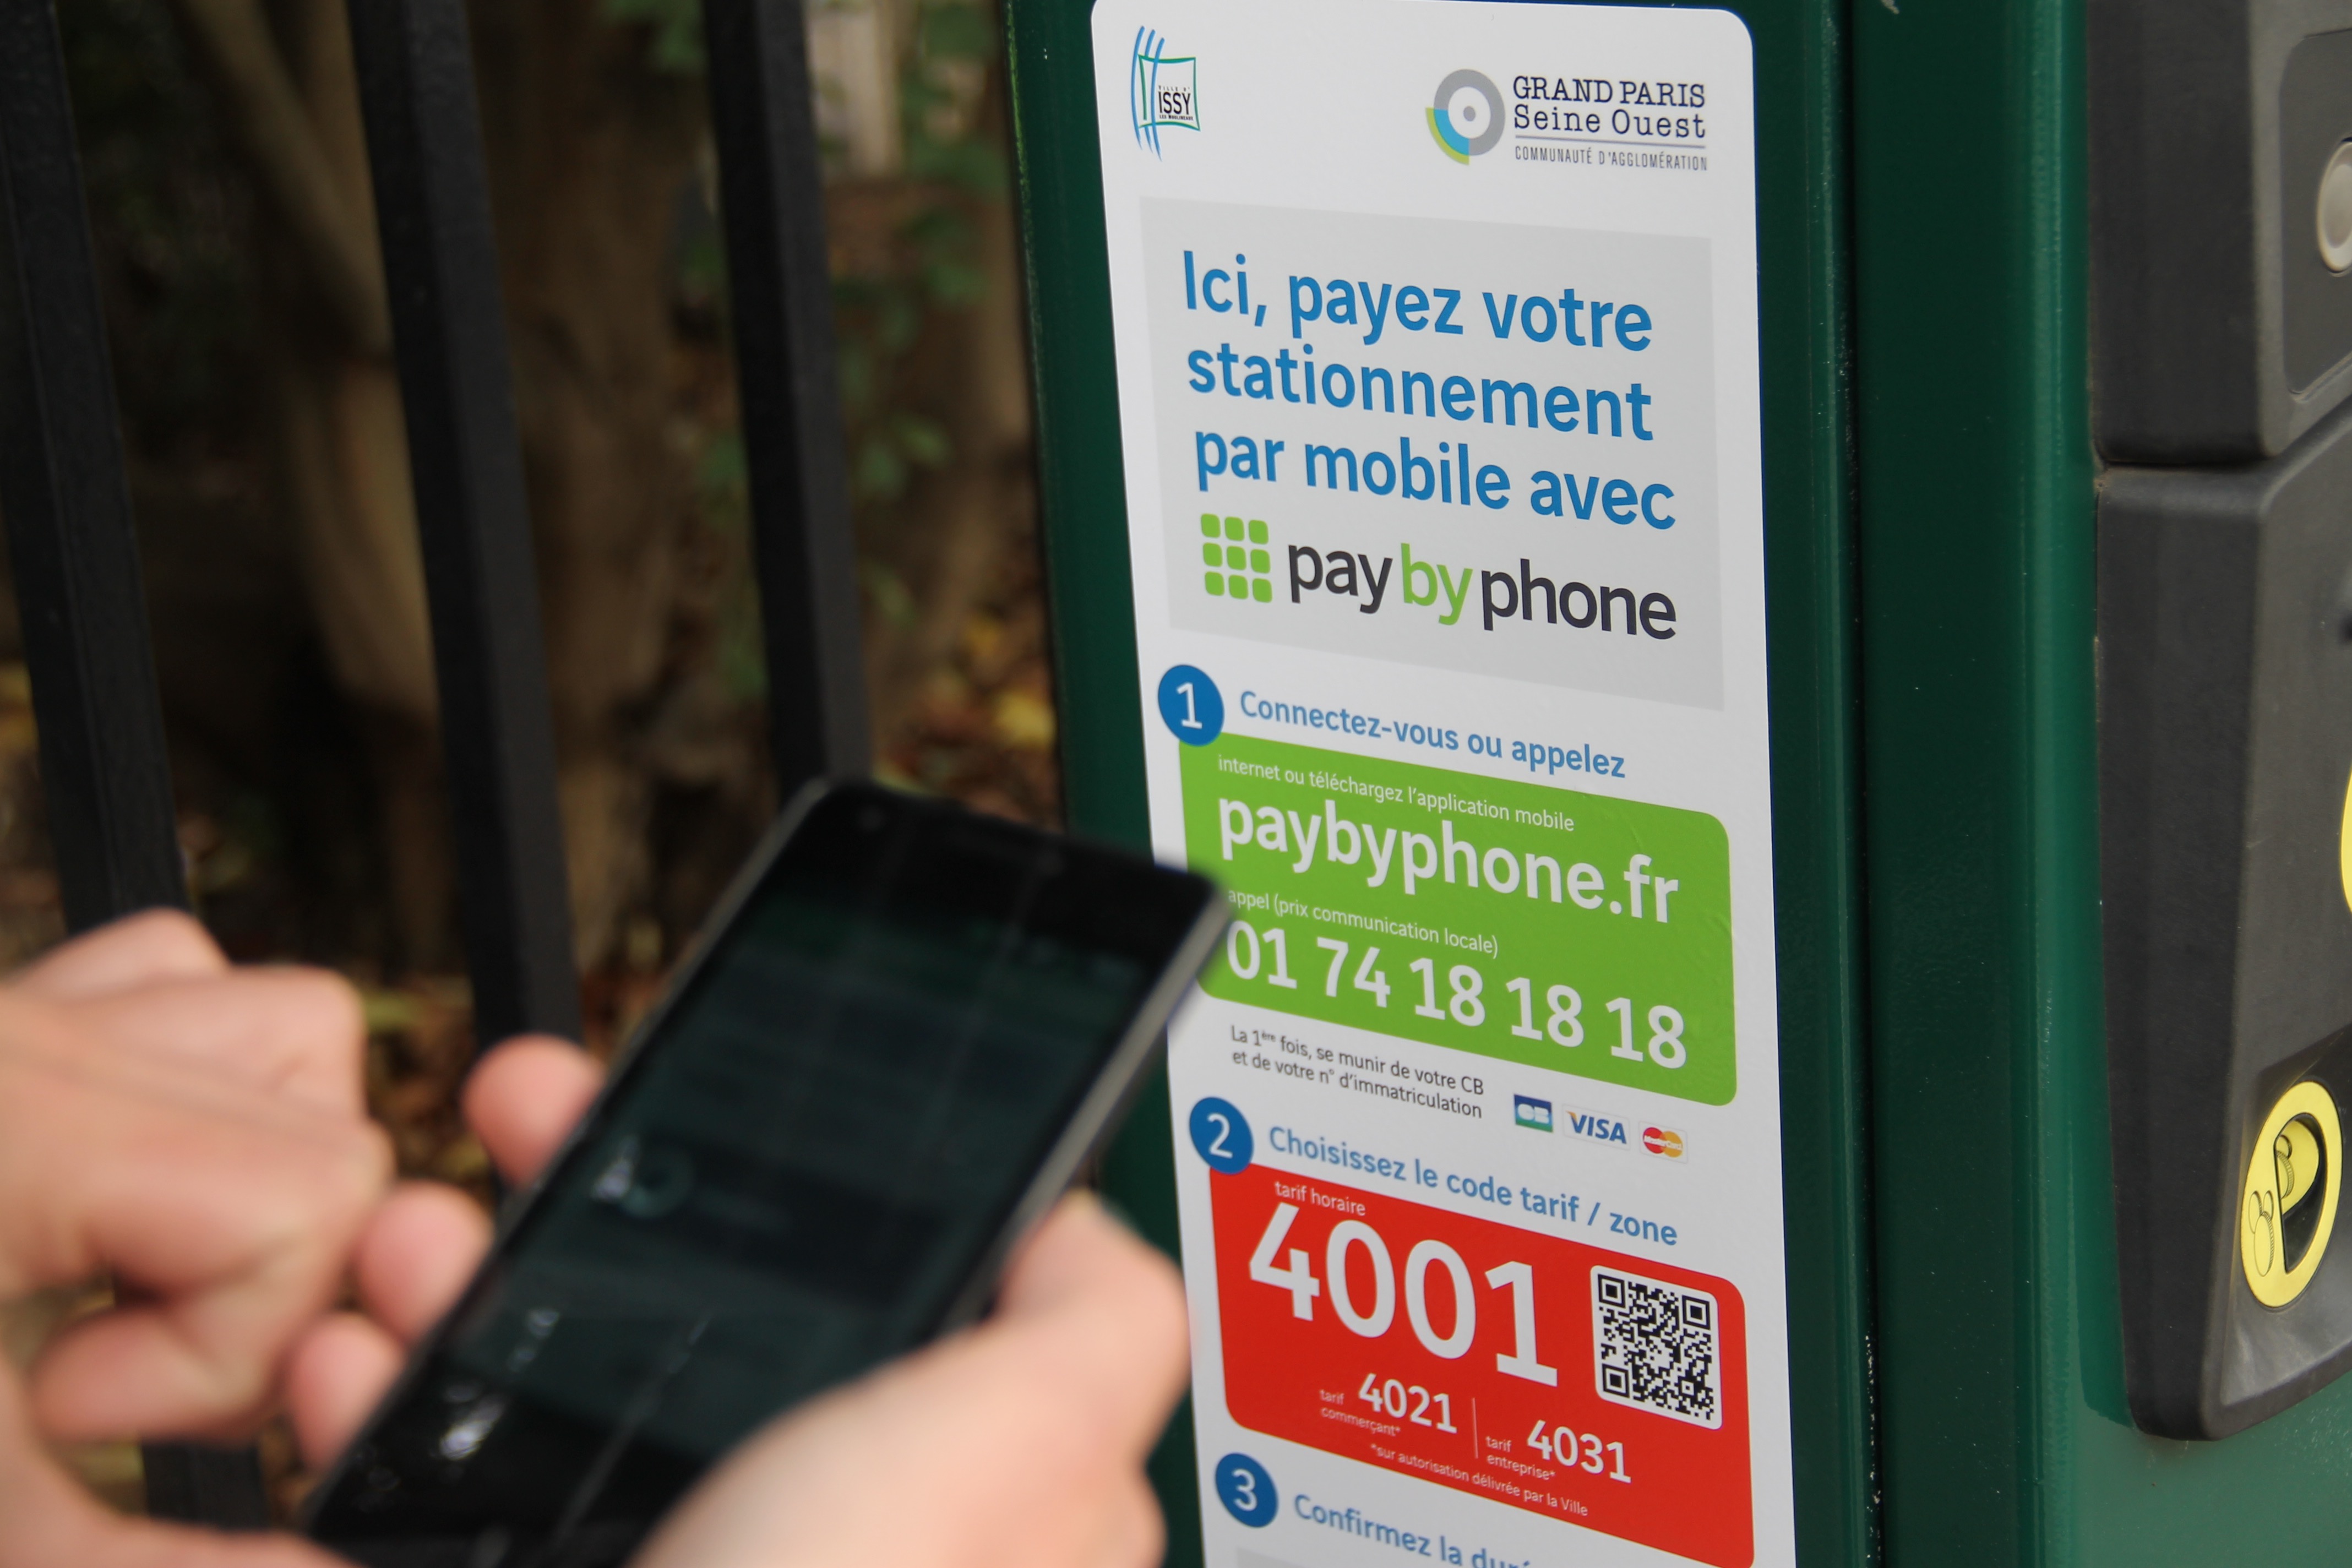 Paybyphone - Grand Paris Seine Ouest